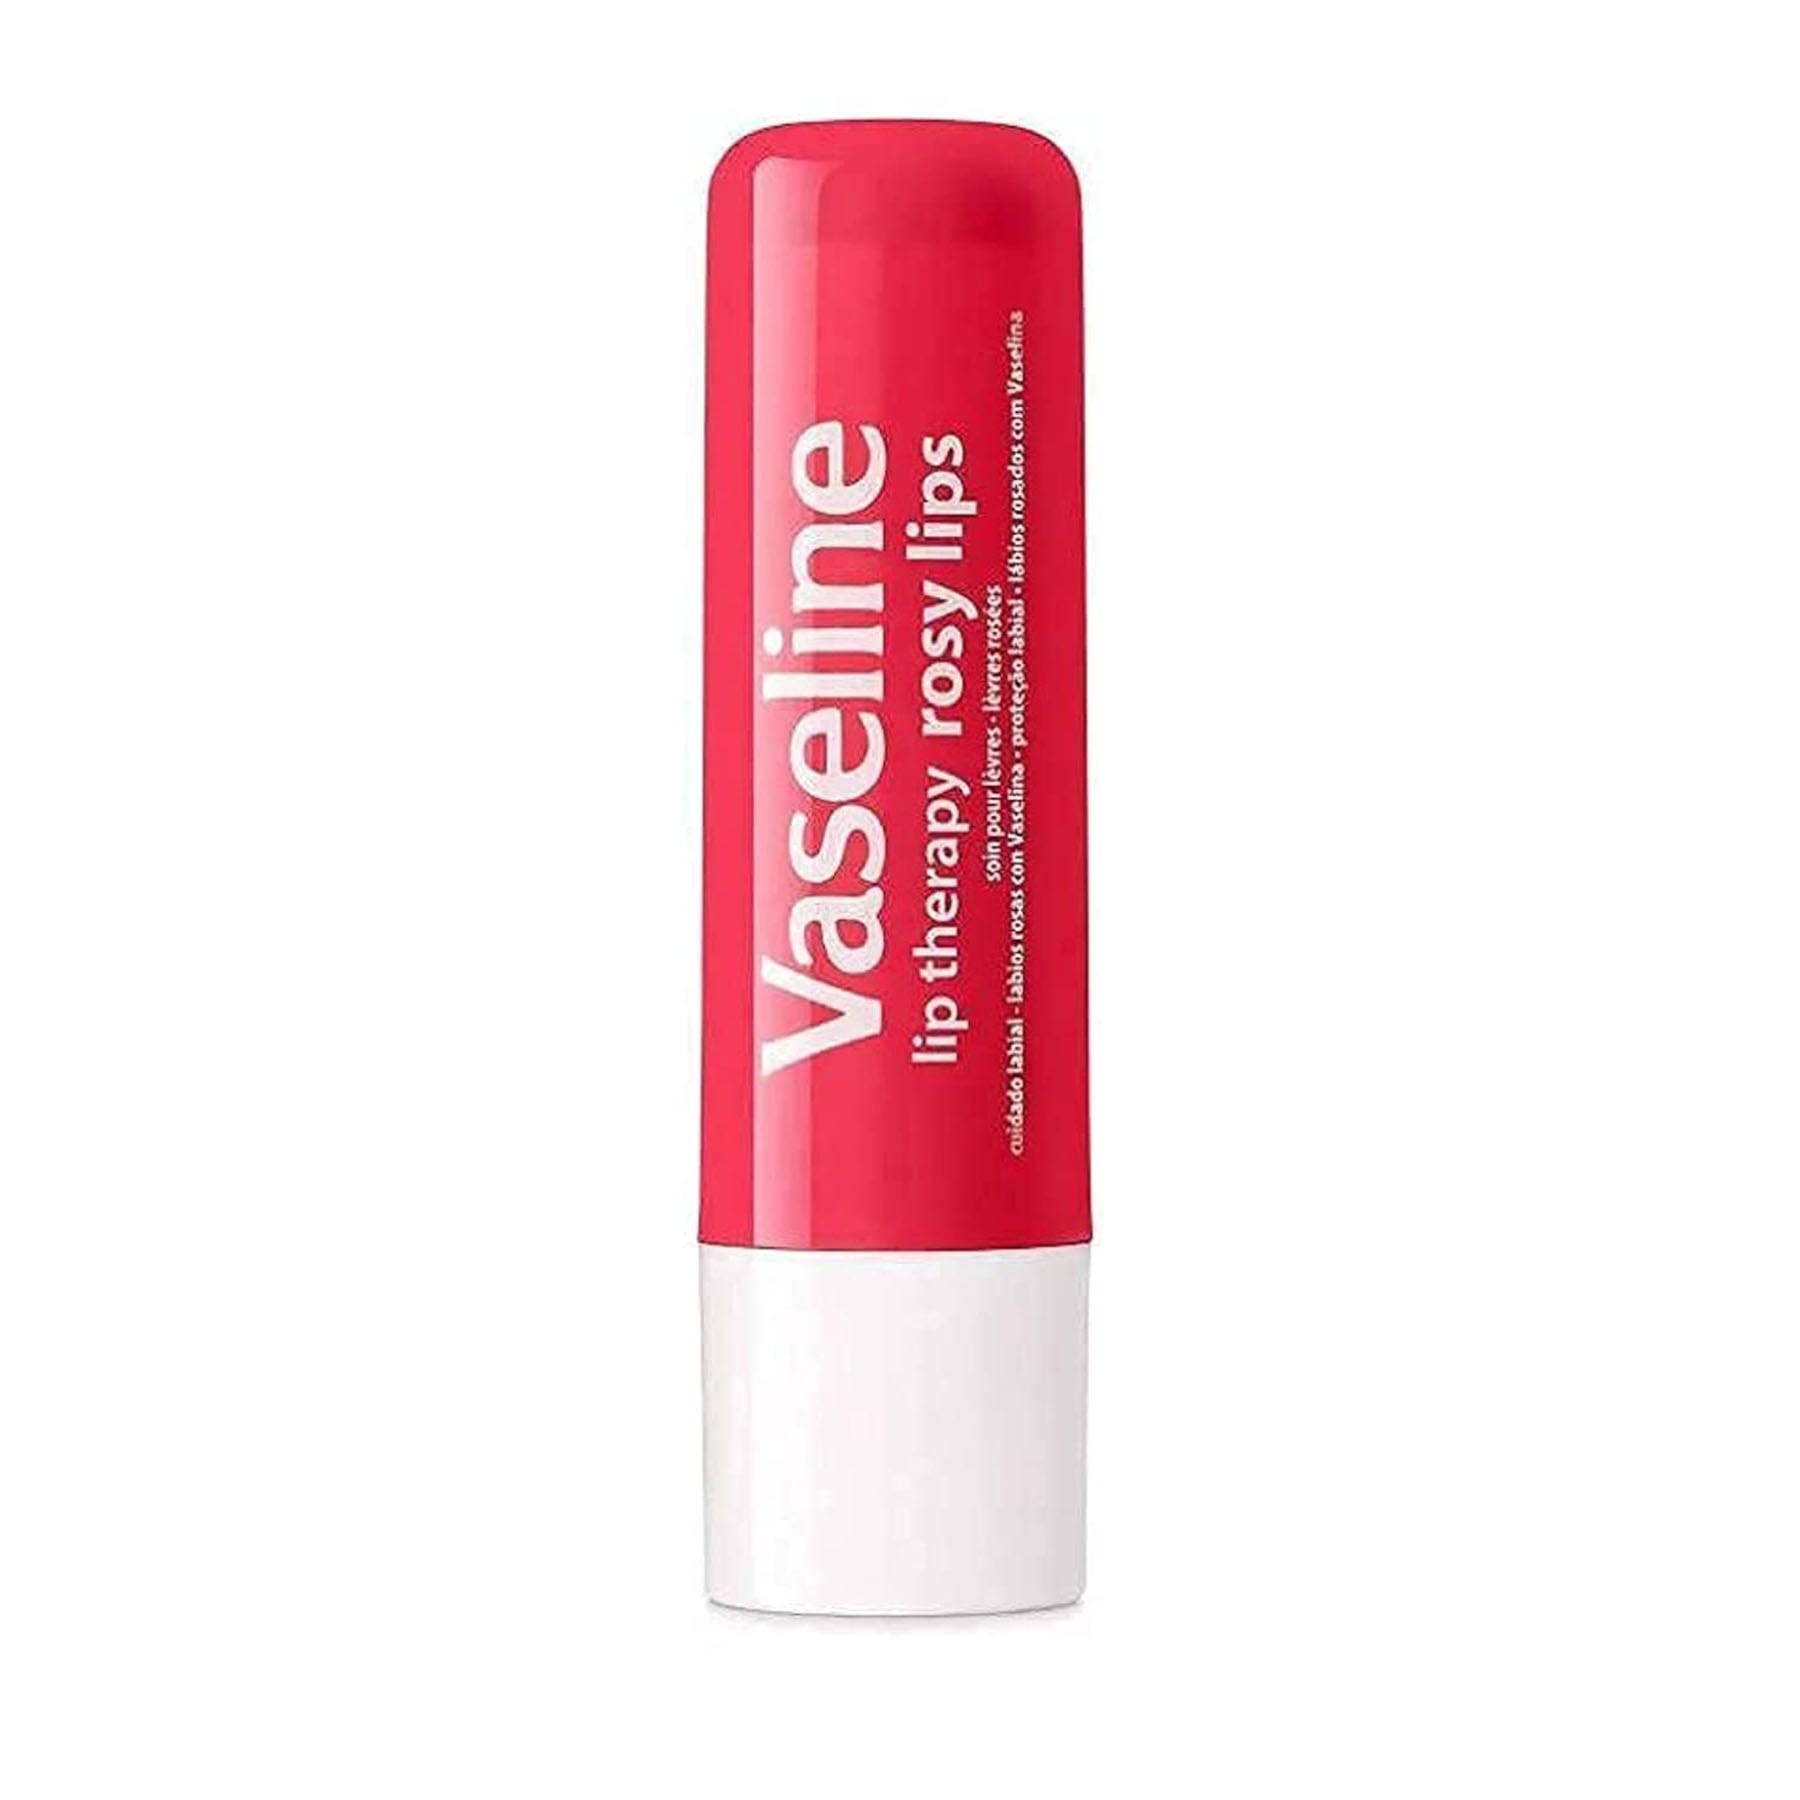 Vaseline Rosy Lips Lip Therapy Sticks: Nourishing & Moisturizing Vaseline Lip Balm 0.16 oz | Image